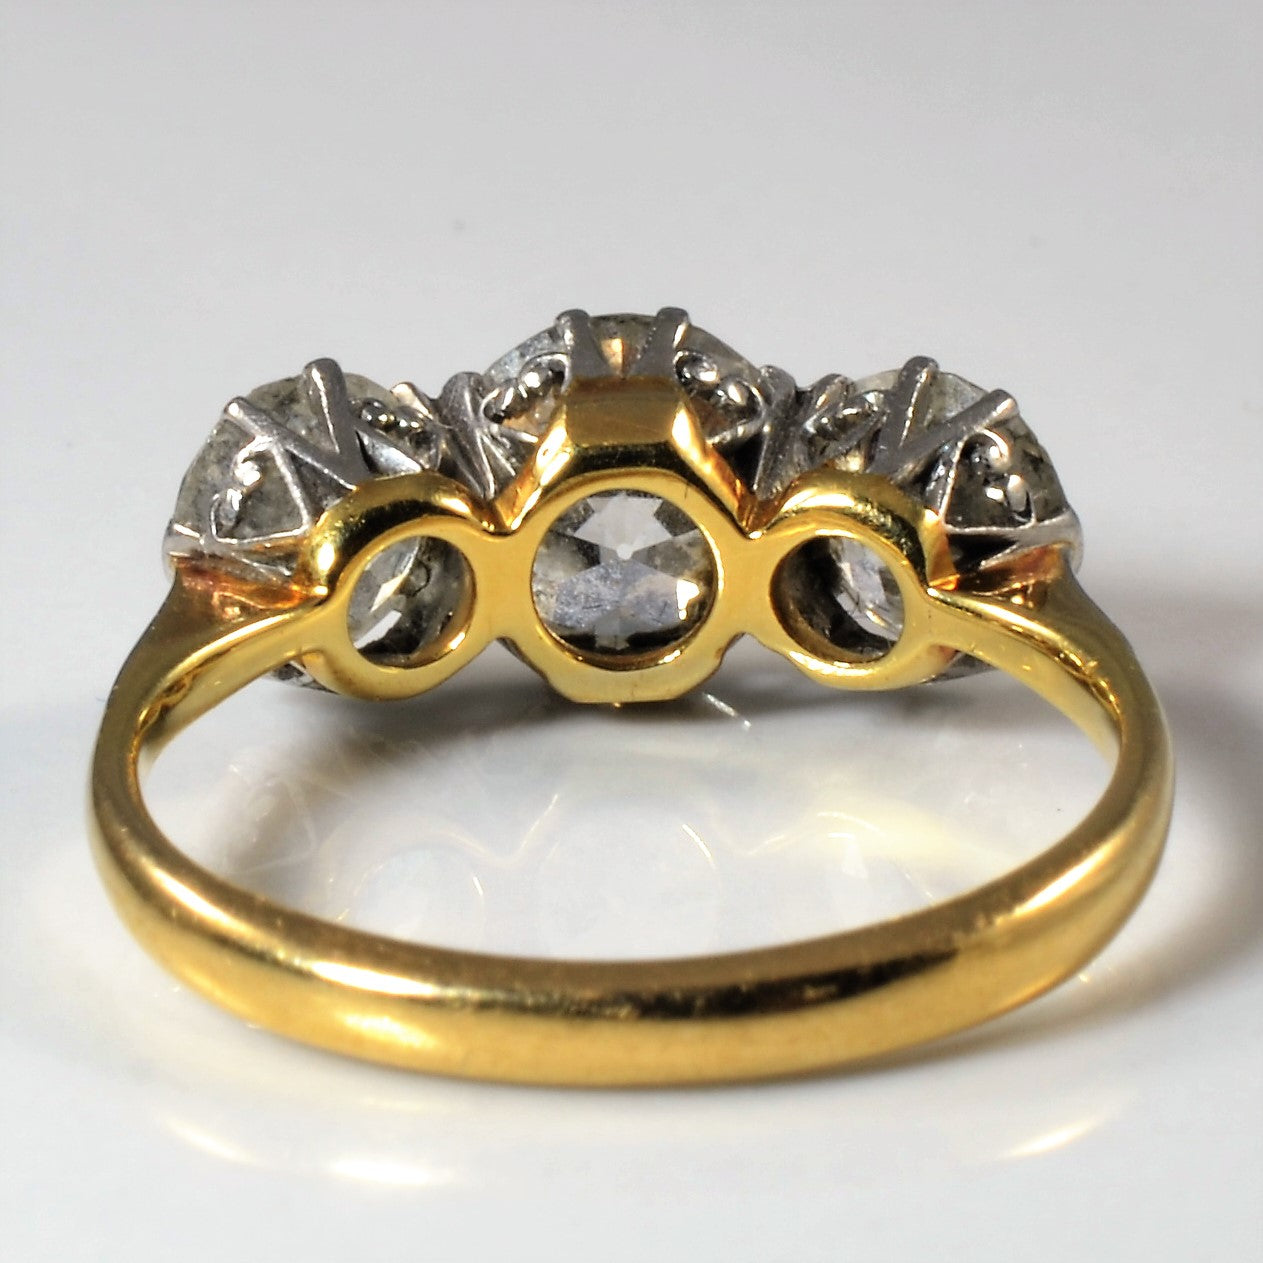 Early 1900s Old European Three Stone Diamond Ring | 2.31ctw | SZ 5.75 |